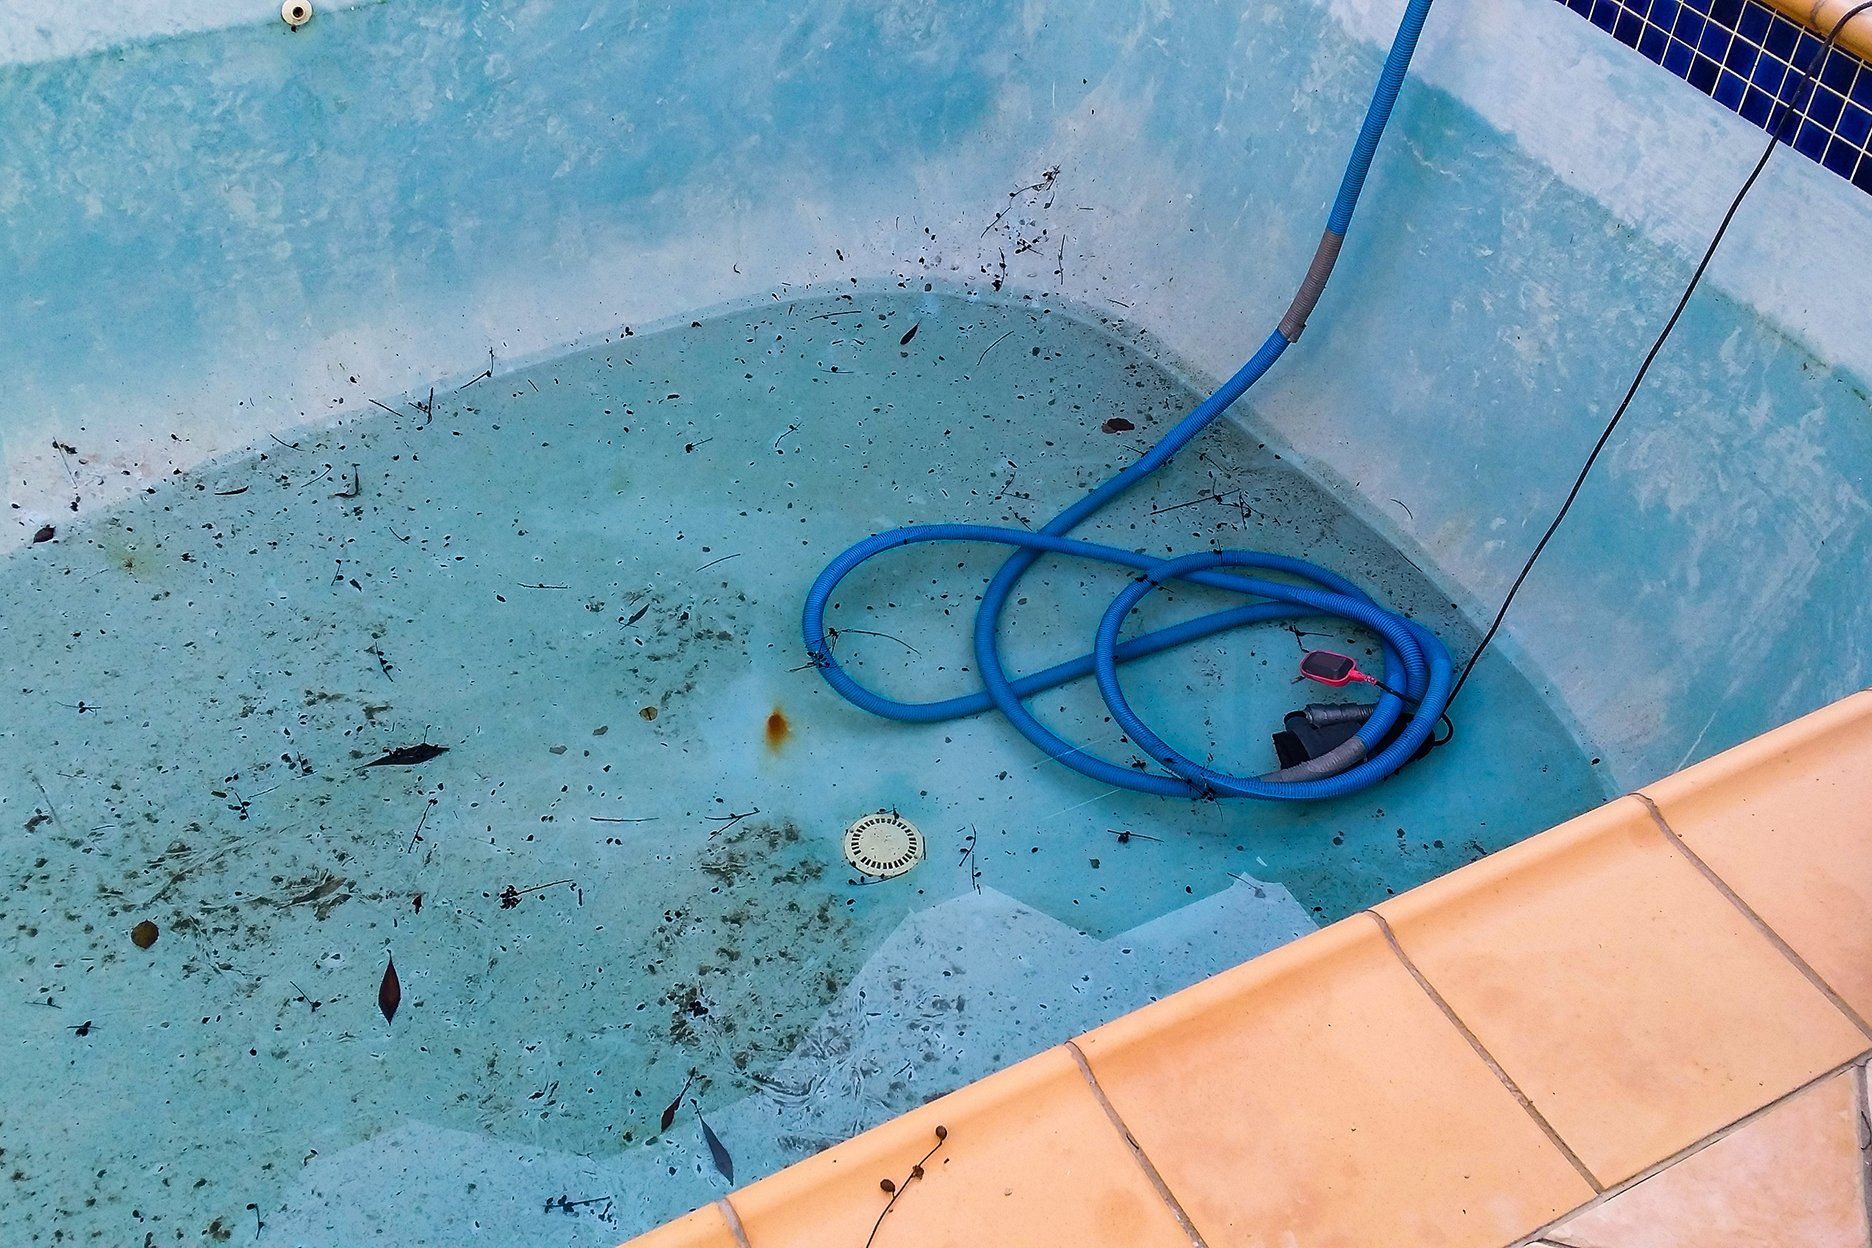 Pool Cleaning vs Drain & Clean: How Should I Drain My Pool